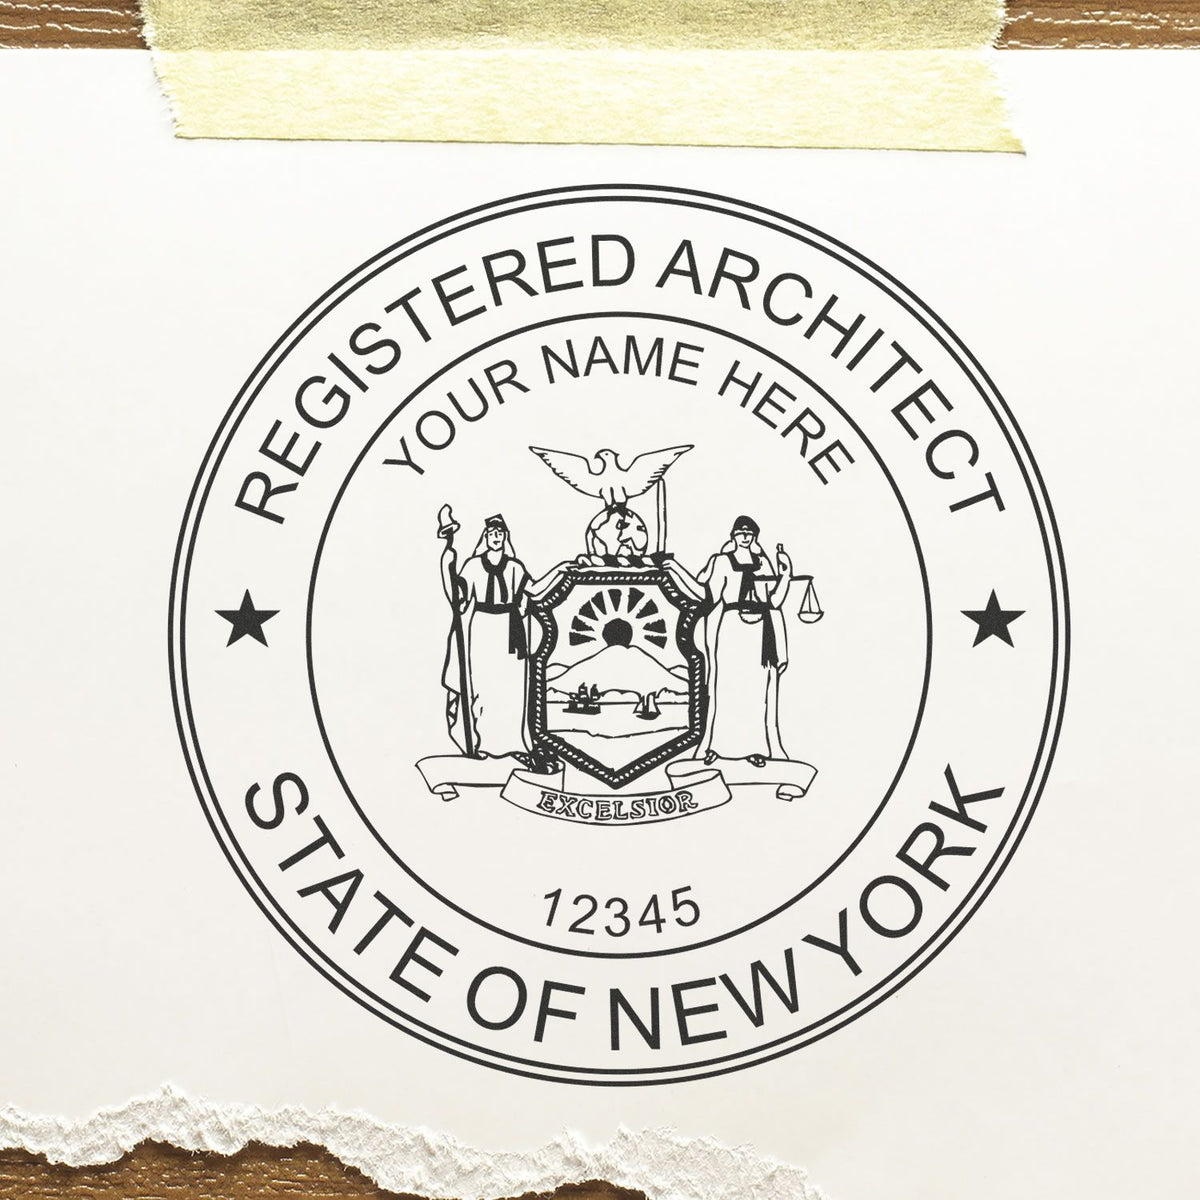 Premium MaxLight Pre-Inked New York Architectural Stamp Lifestyle Photo